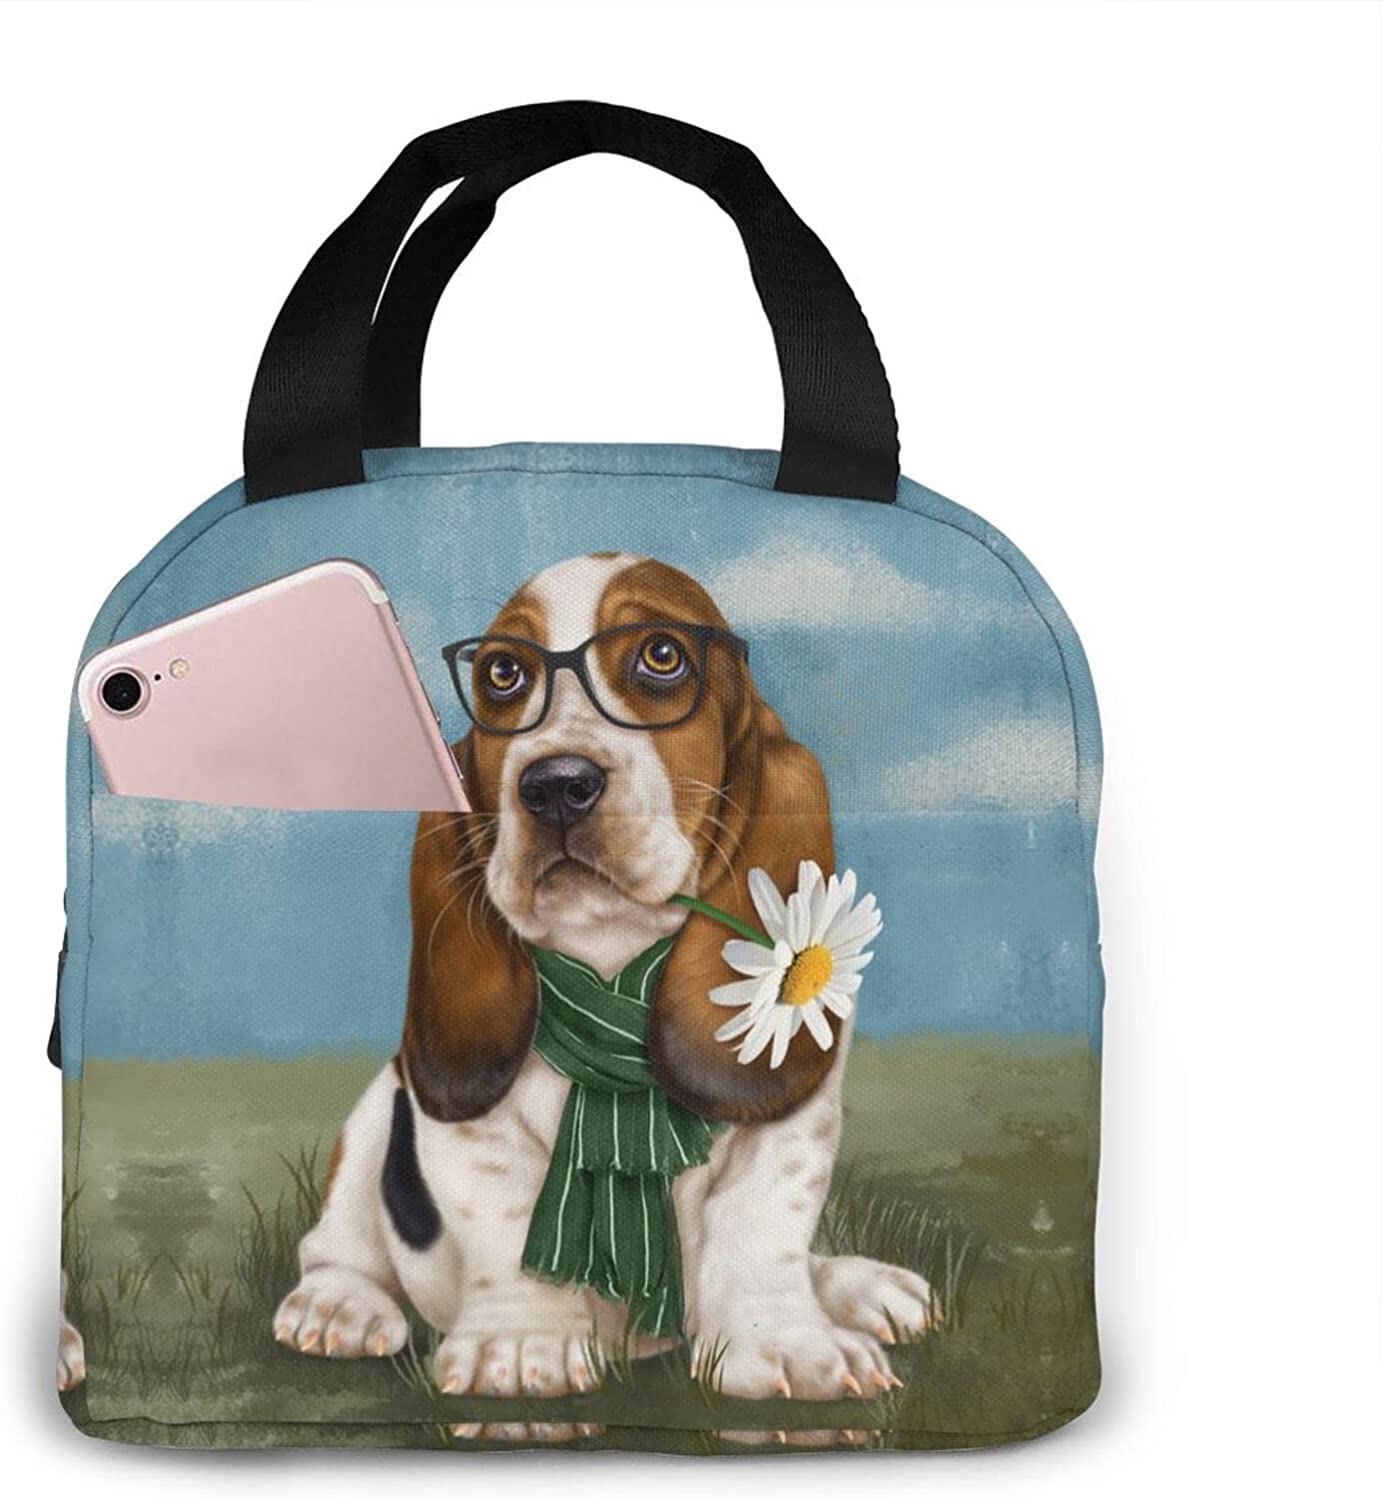 Basset Hound Dog Portable Lunch Bag Woman Waterproof Tote Shoulder Bags Box Small Handbags Purses,Shopping Office/School/Picnic/Travel/Camping